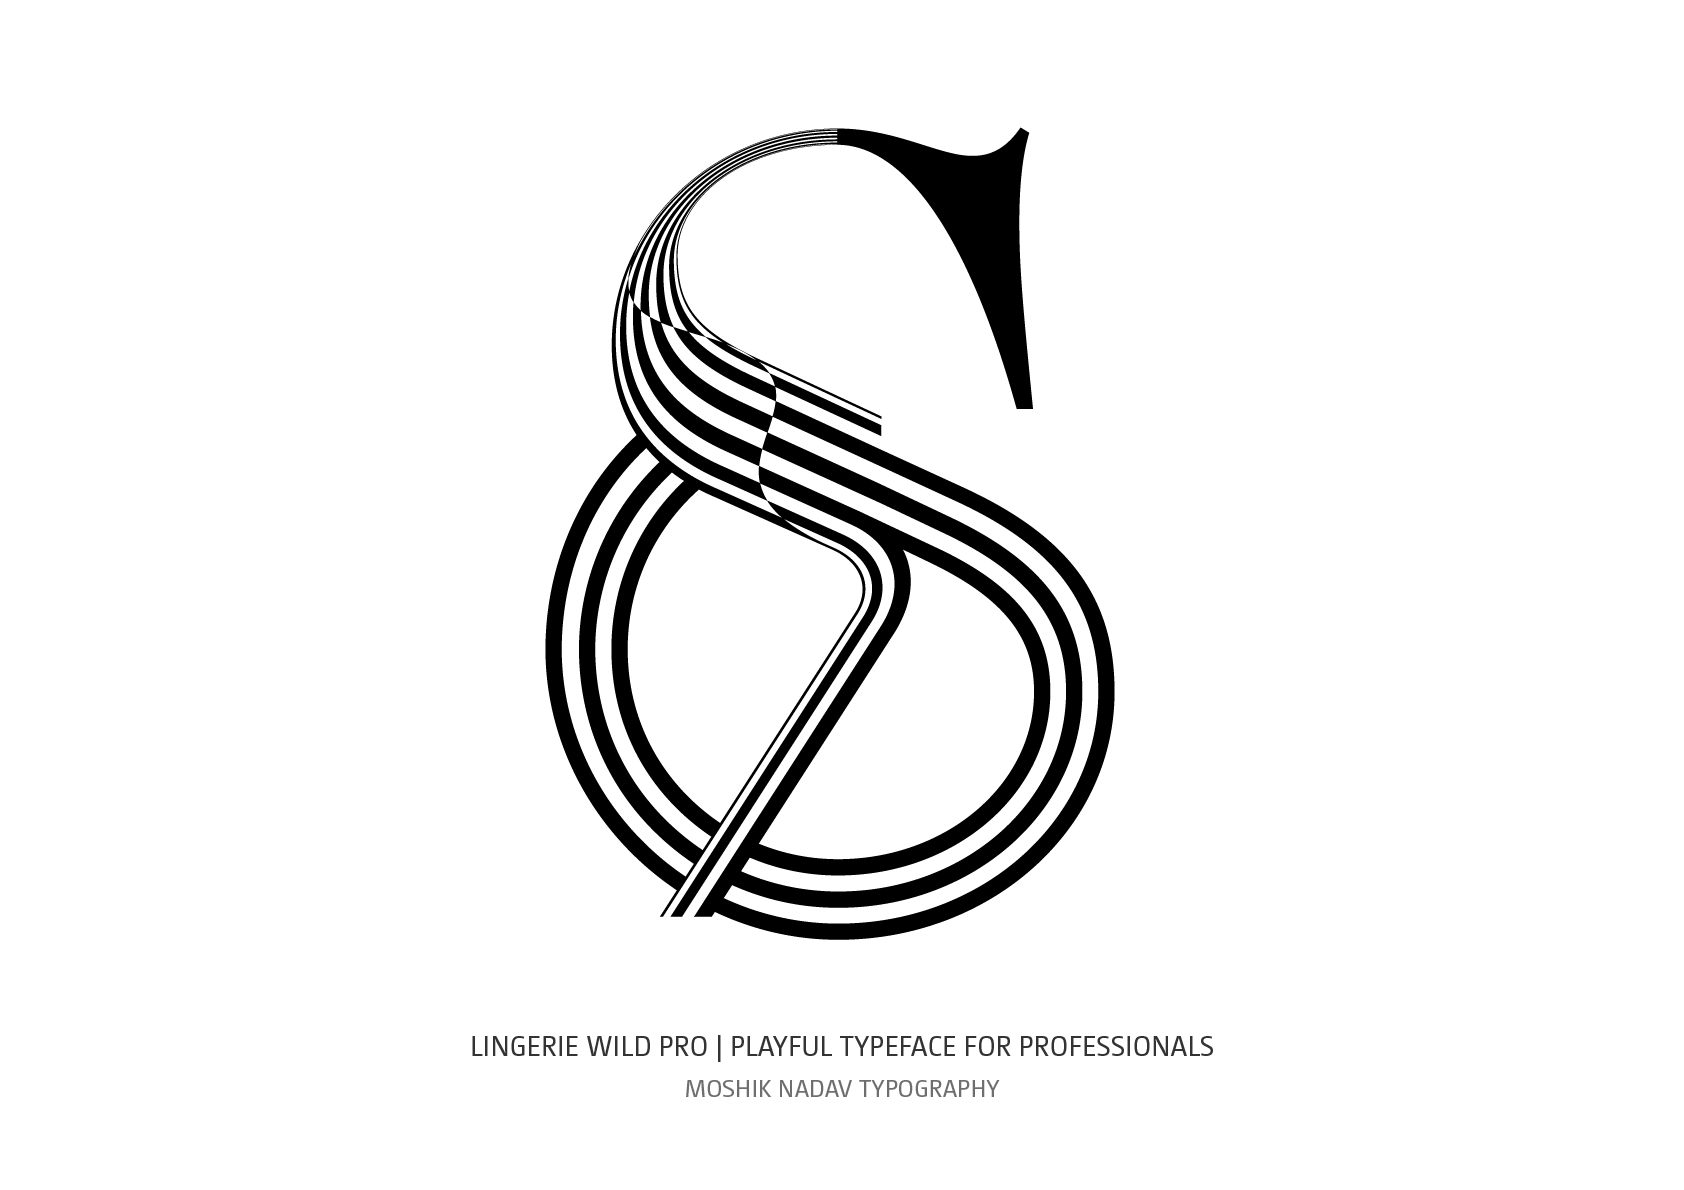 Playful ampersand designed by Moshik Nadav Fashion Typography based in New York City